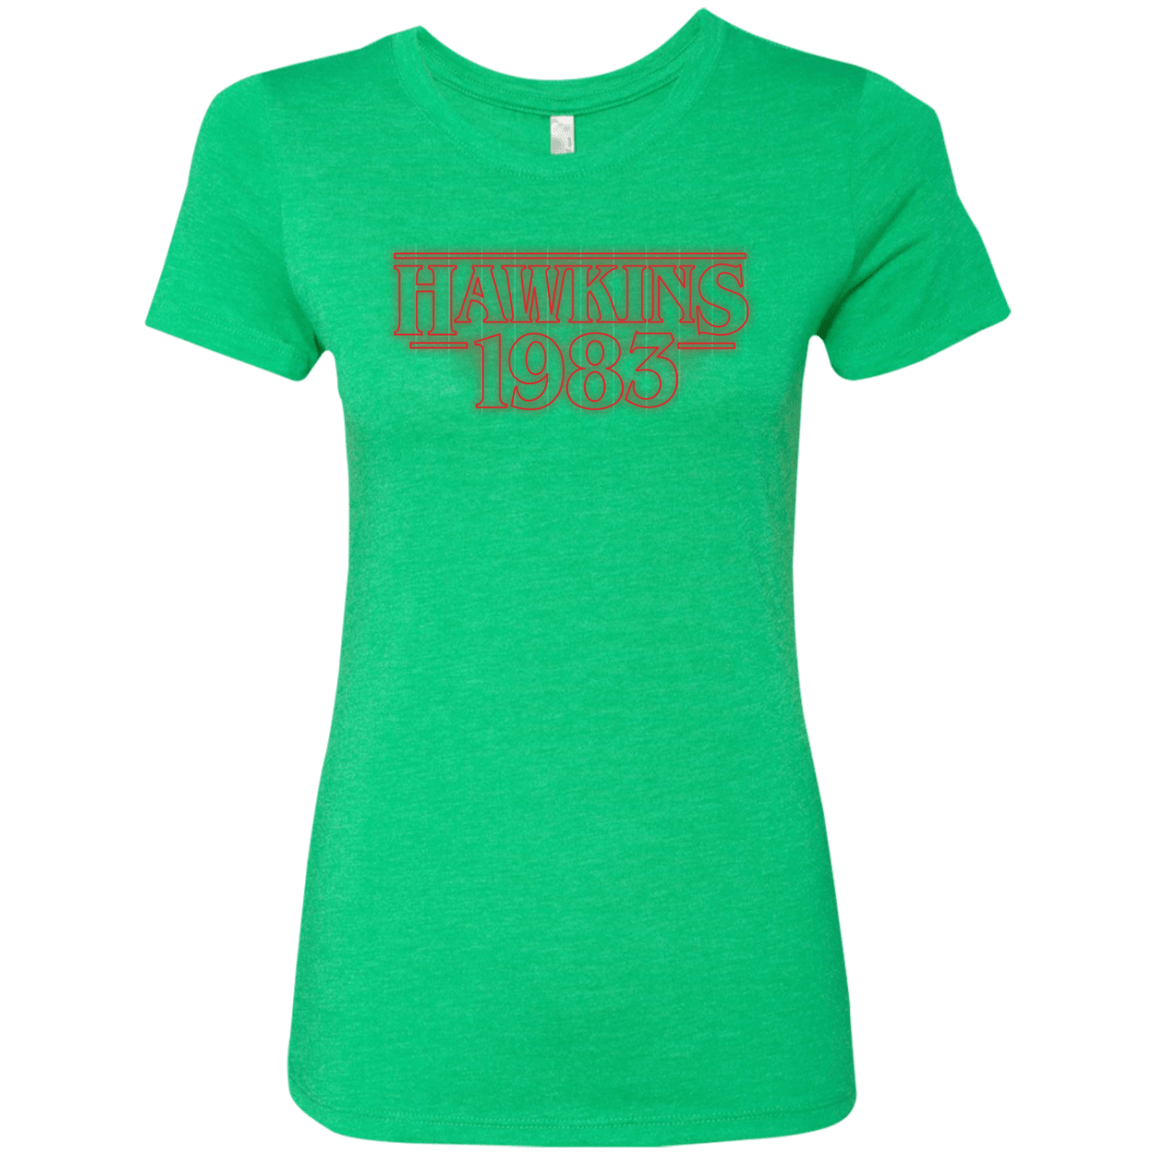 T-Shirts Envy / Small Hawkins 83 Women's Triblend T-Shirt